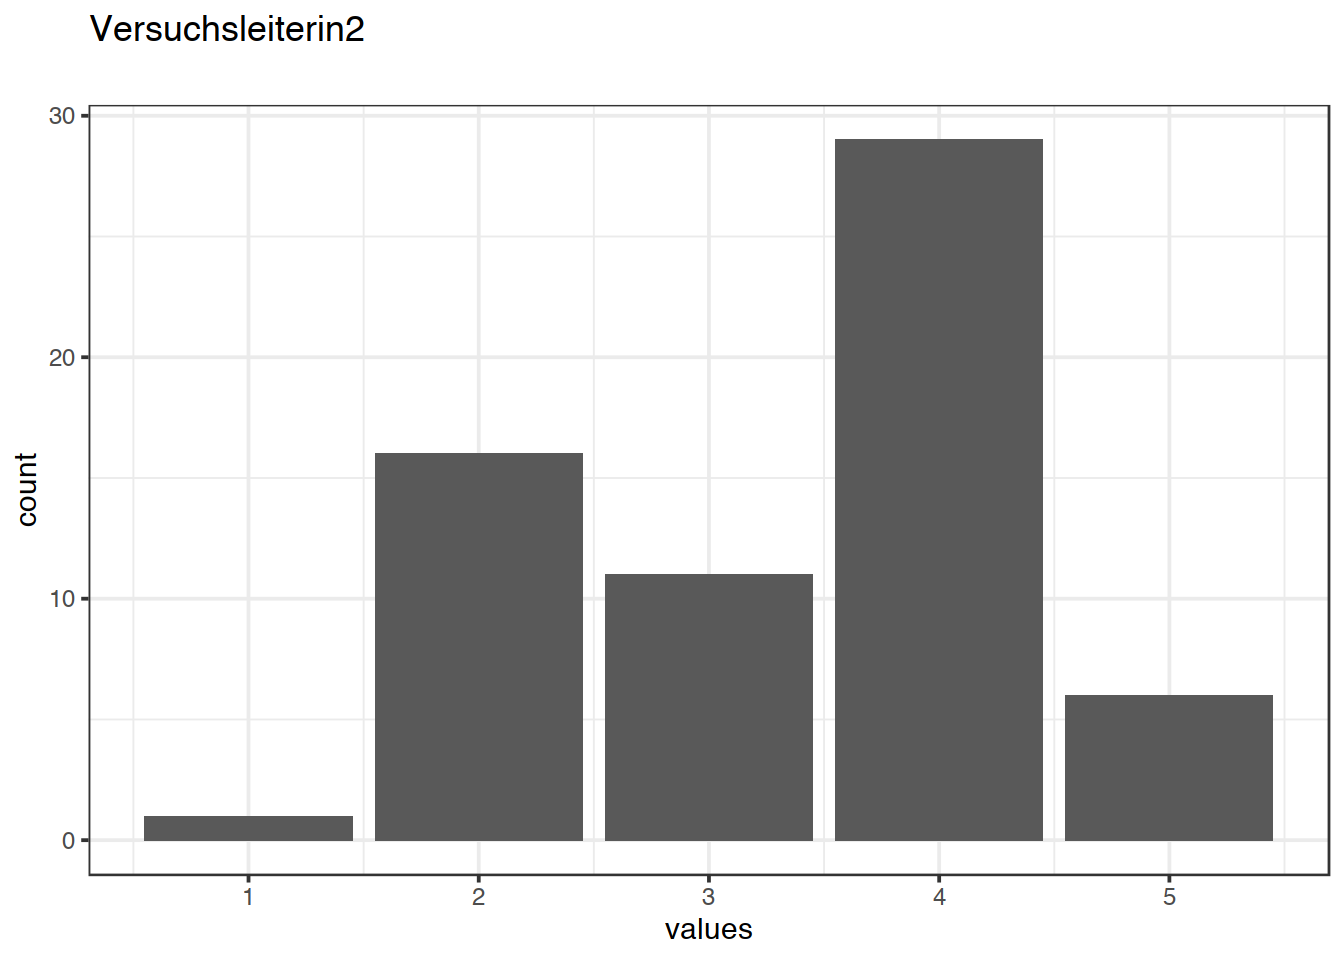 Distribution of values for Versuchsleiterin2